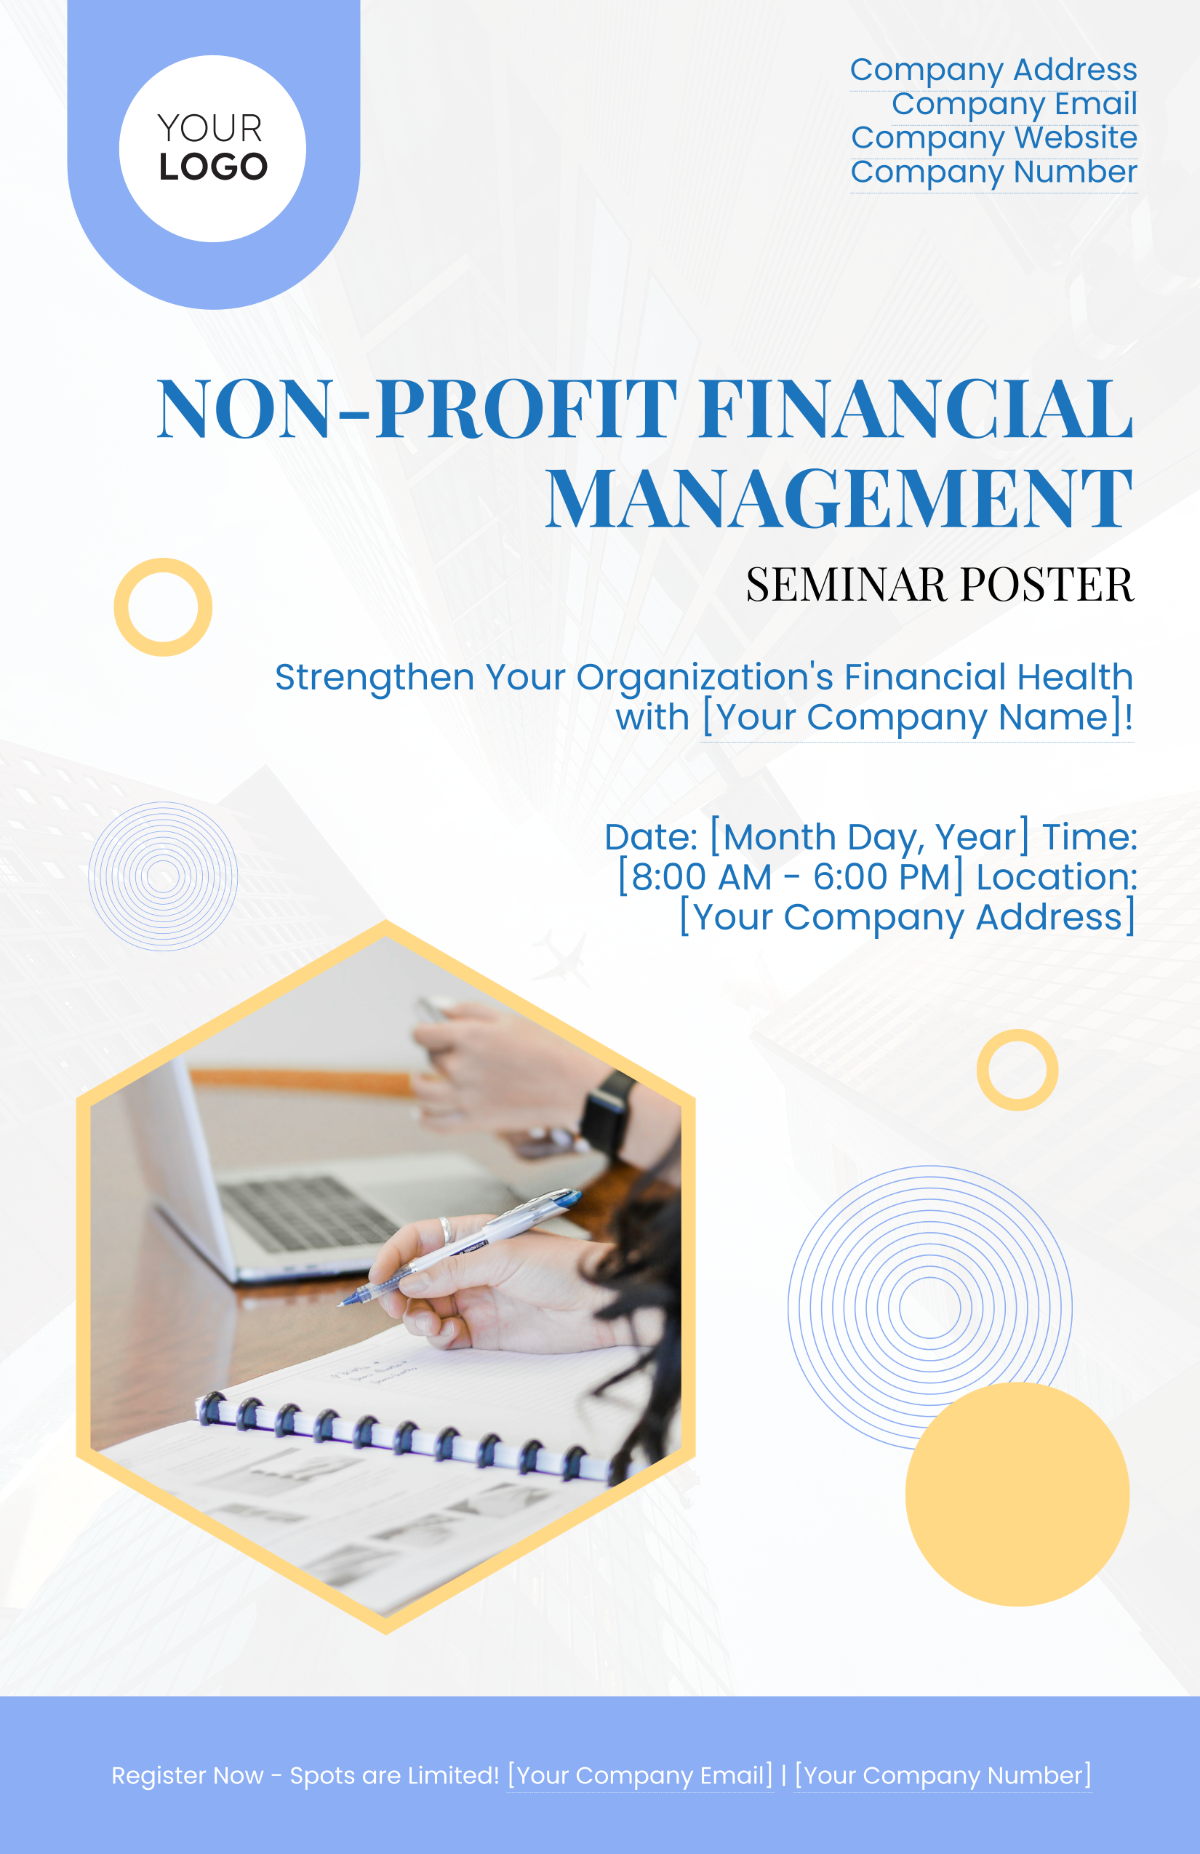 Non-Profit Financial Management Seminar Poster Template